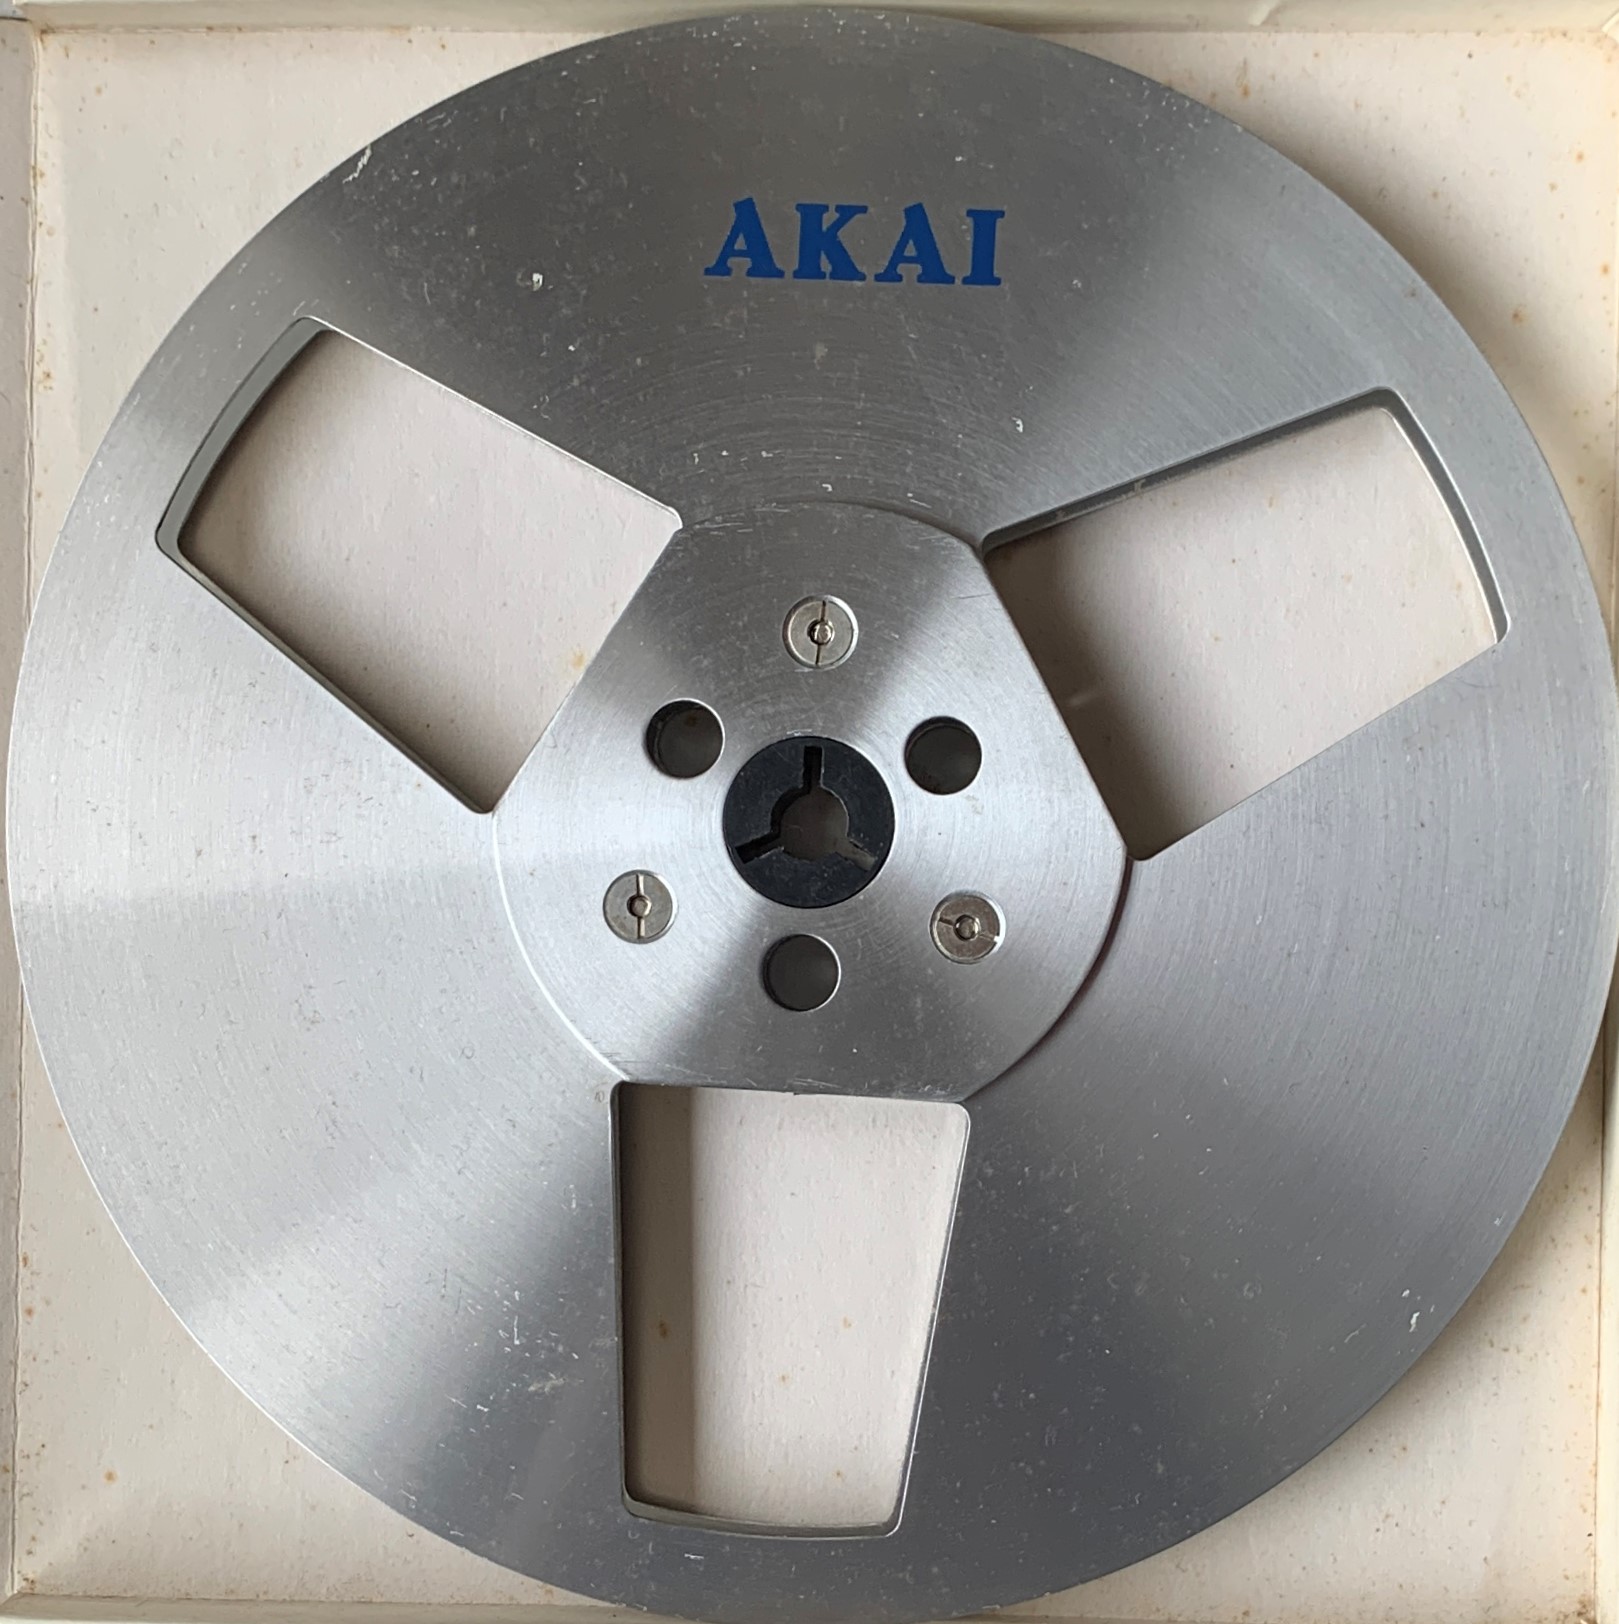 Akai - 7 x 1/4 Metal Tape Reels - Lot of 3 - Empty